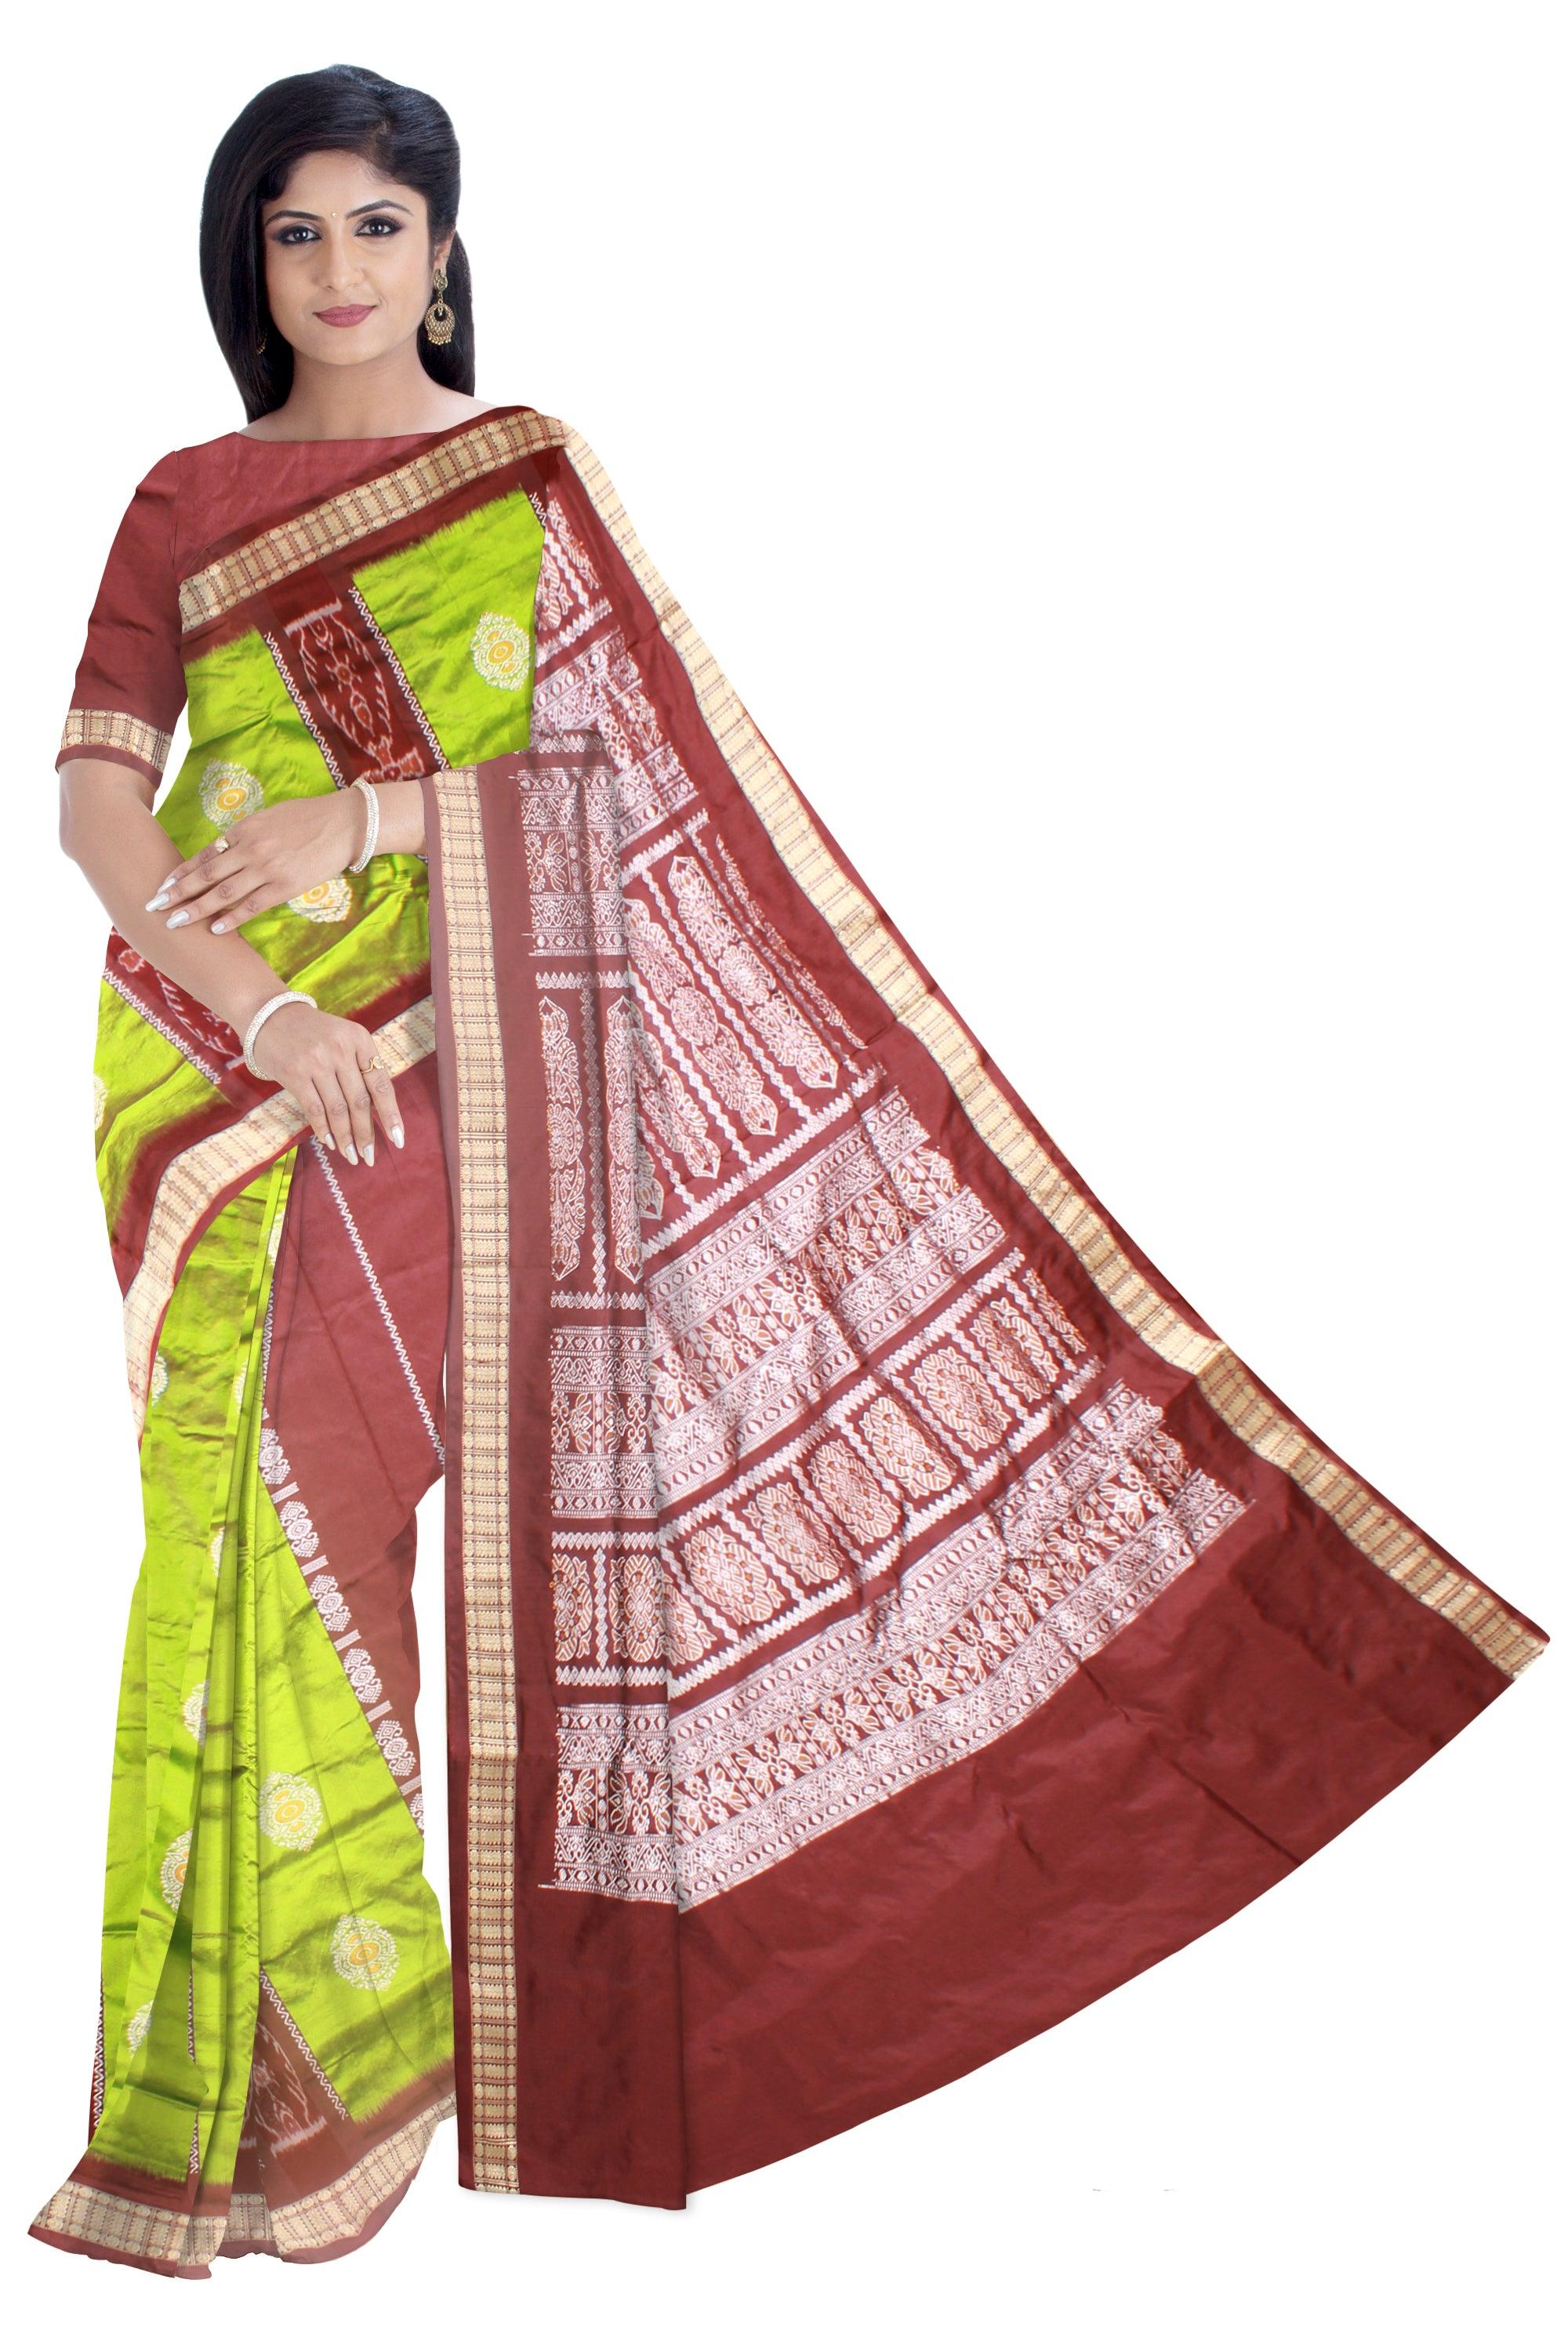 Sambalpuri Mix pata saree in Green colour Patli design body, with blouse piece. - Koshali Arts & Crafts Enterprise